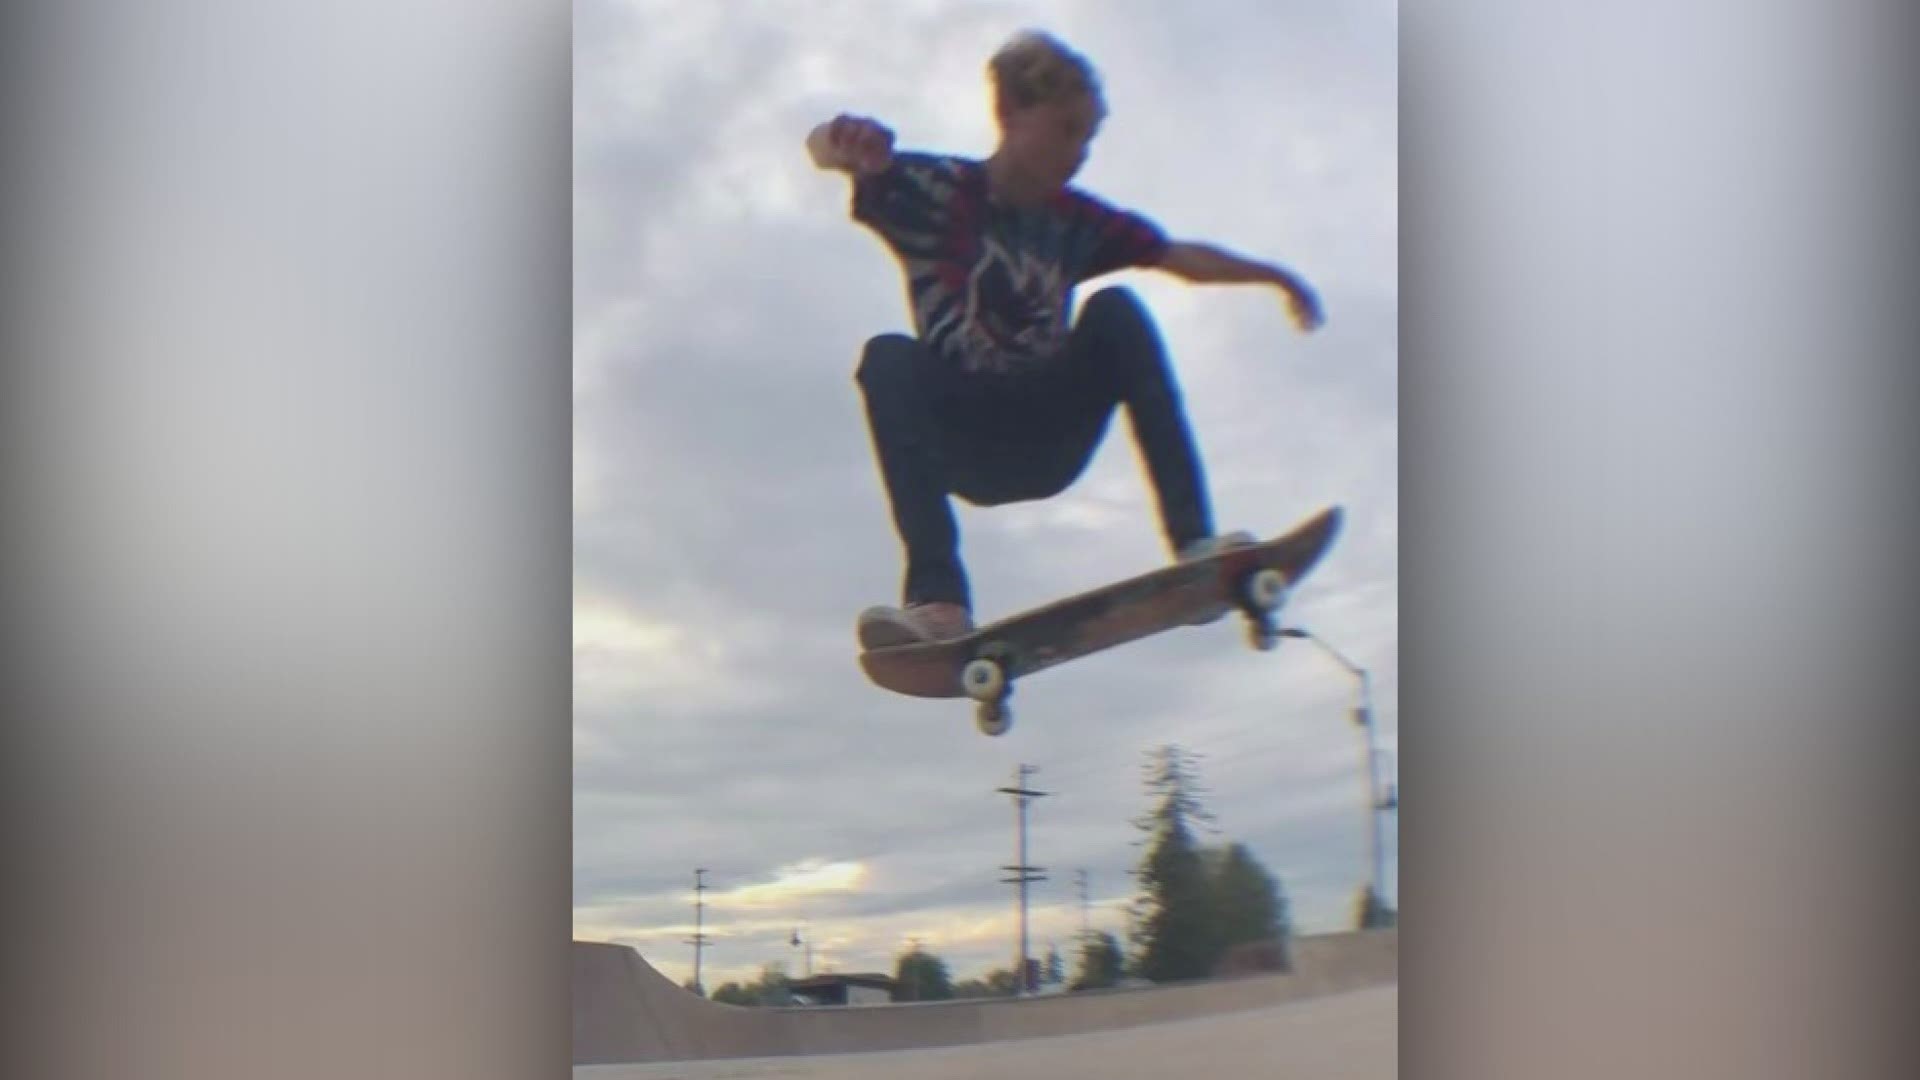 Berrett Wirth Crossley, 13, died following a skateboarding fall in Buckley.